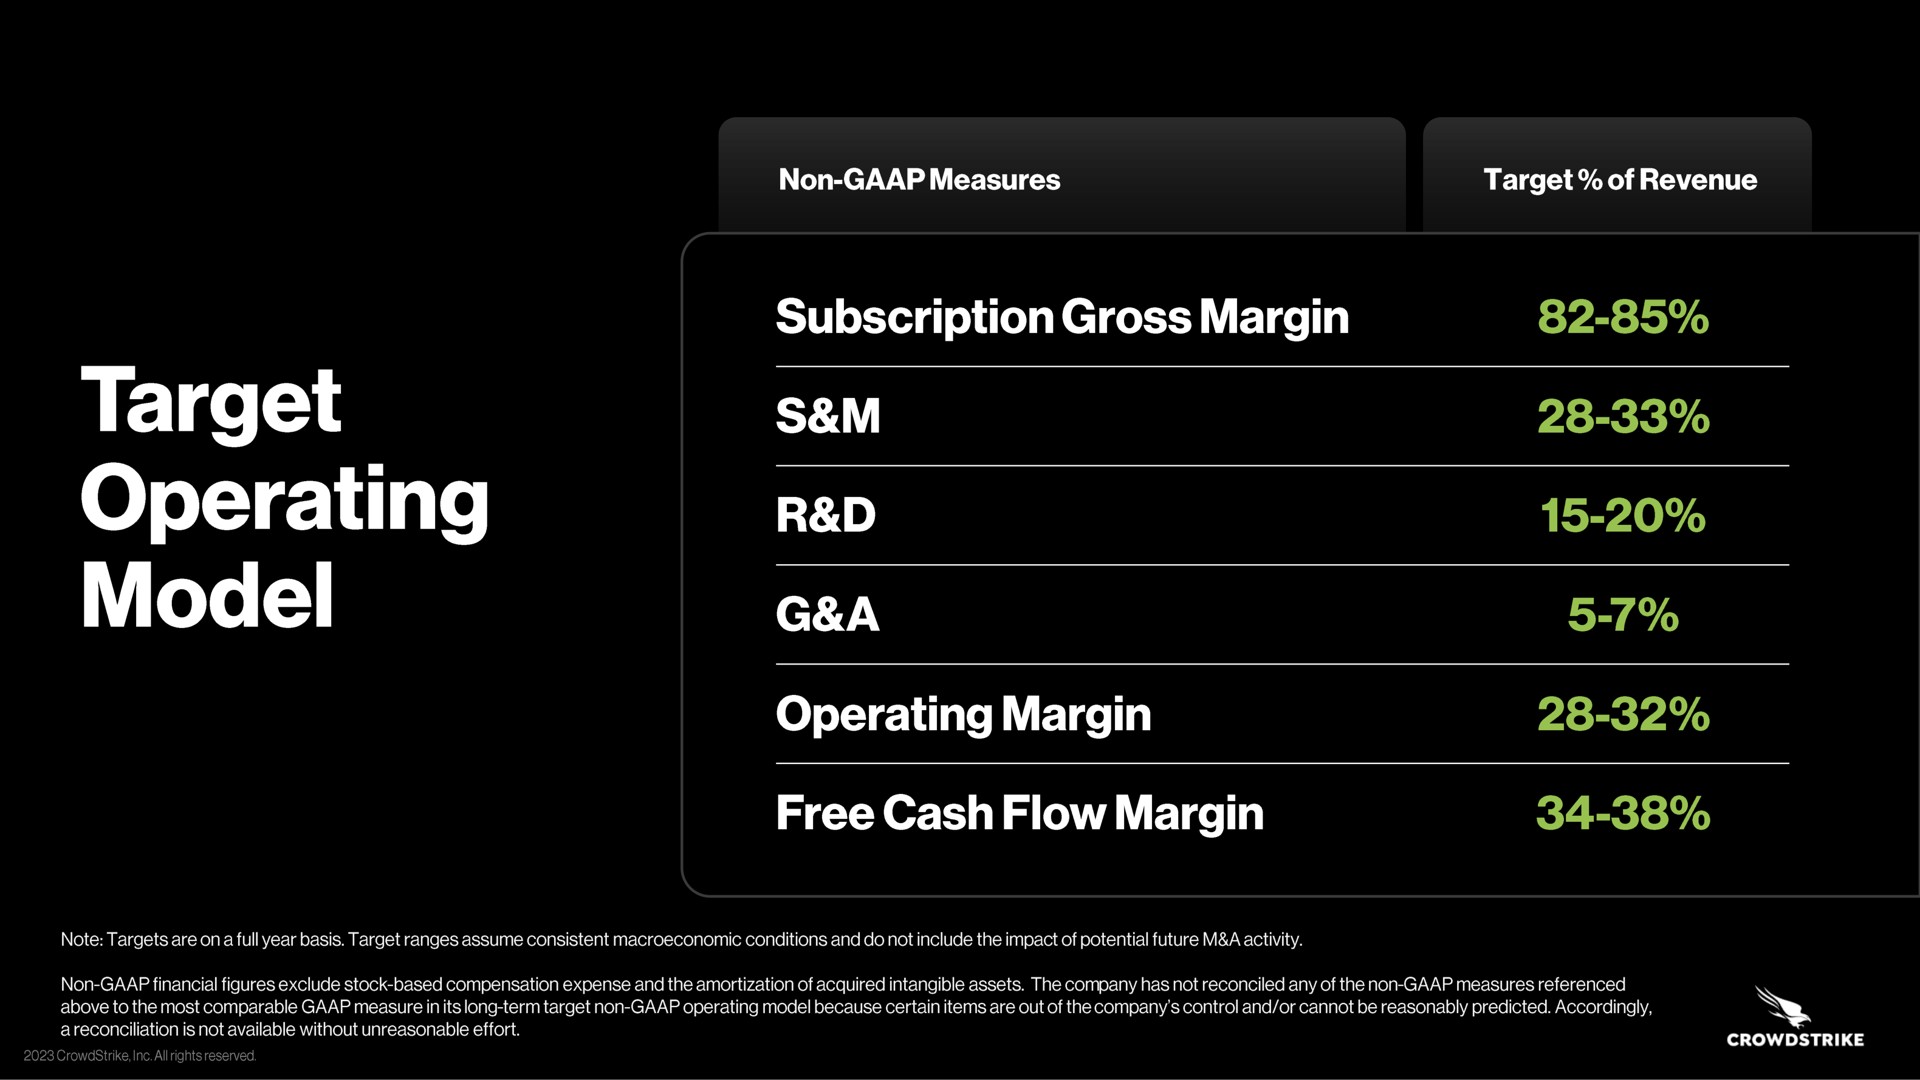 target operating model subscription gross margin ara a operating margin free cash flow margin perky | Crowdstrike